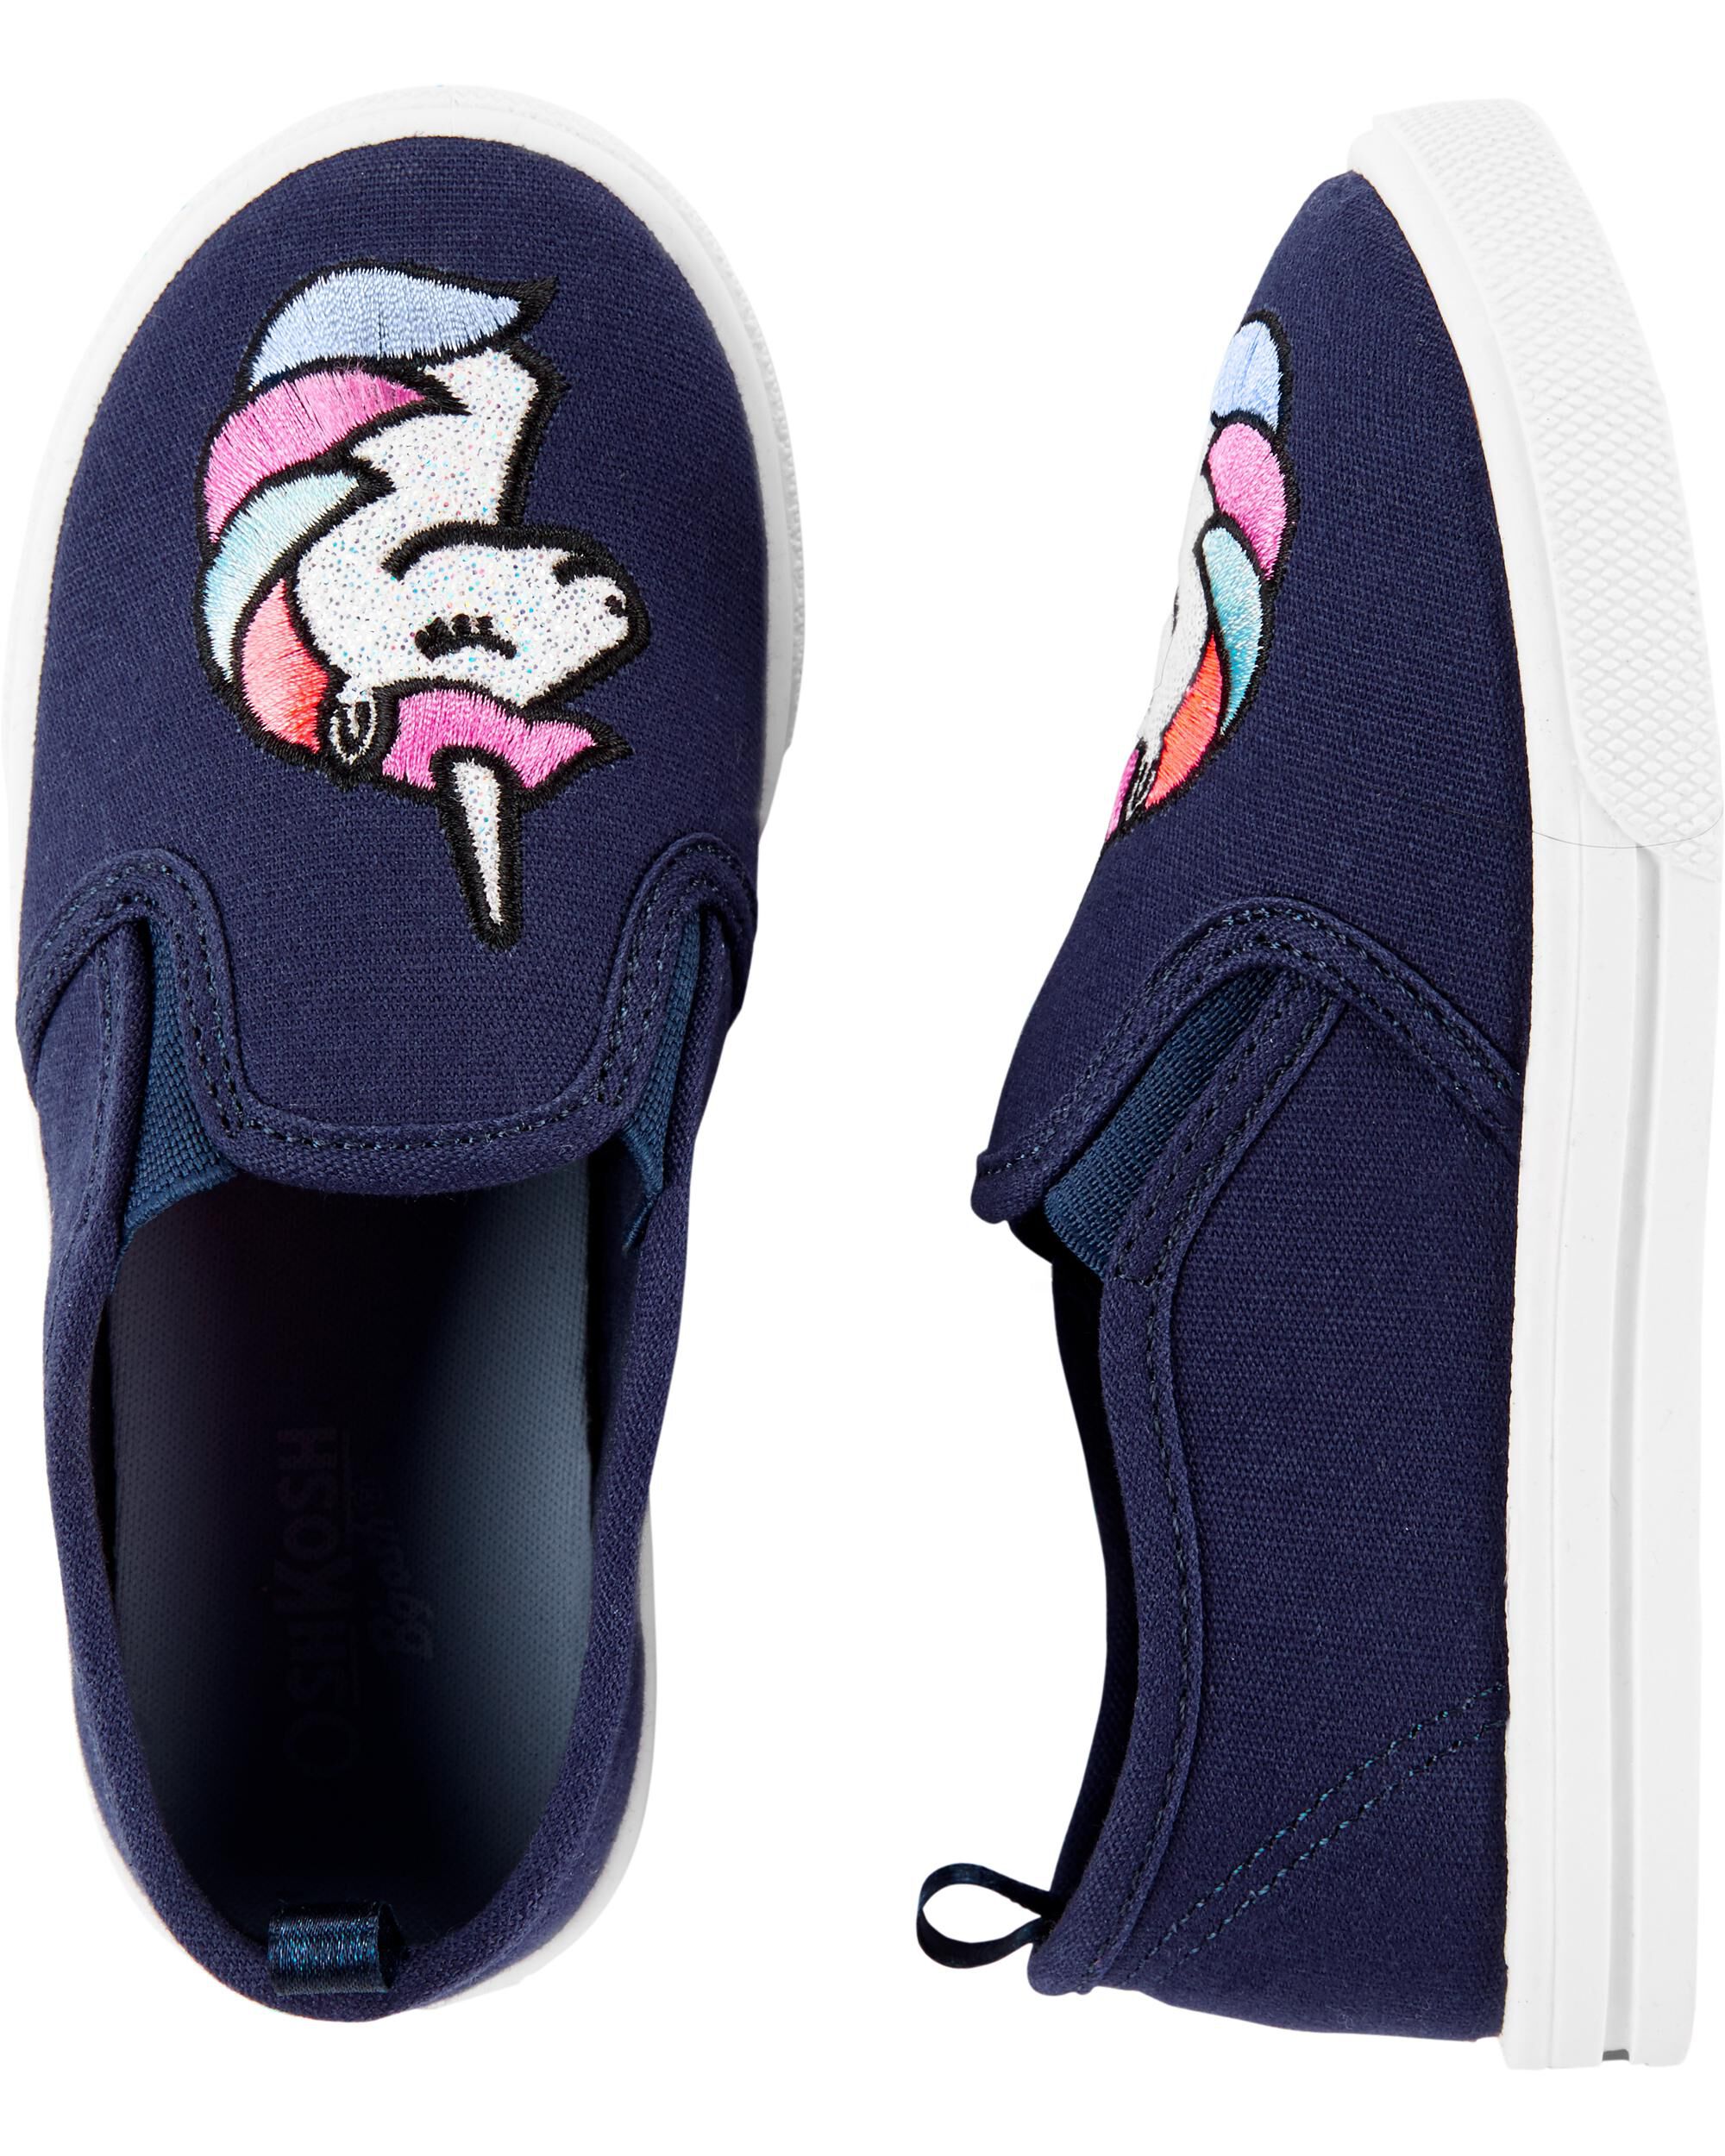 carter's unicorn shoes